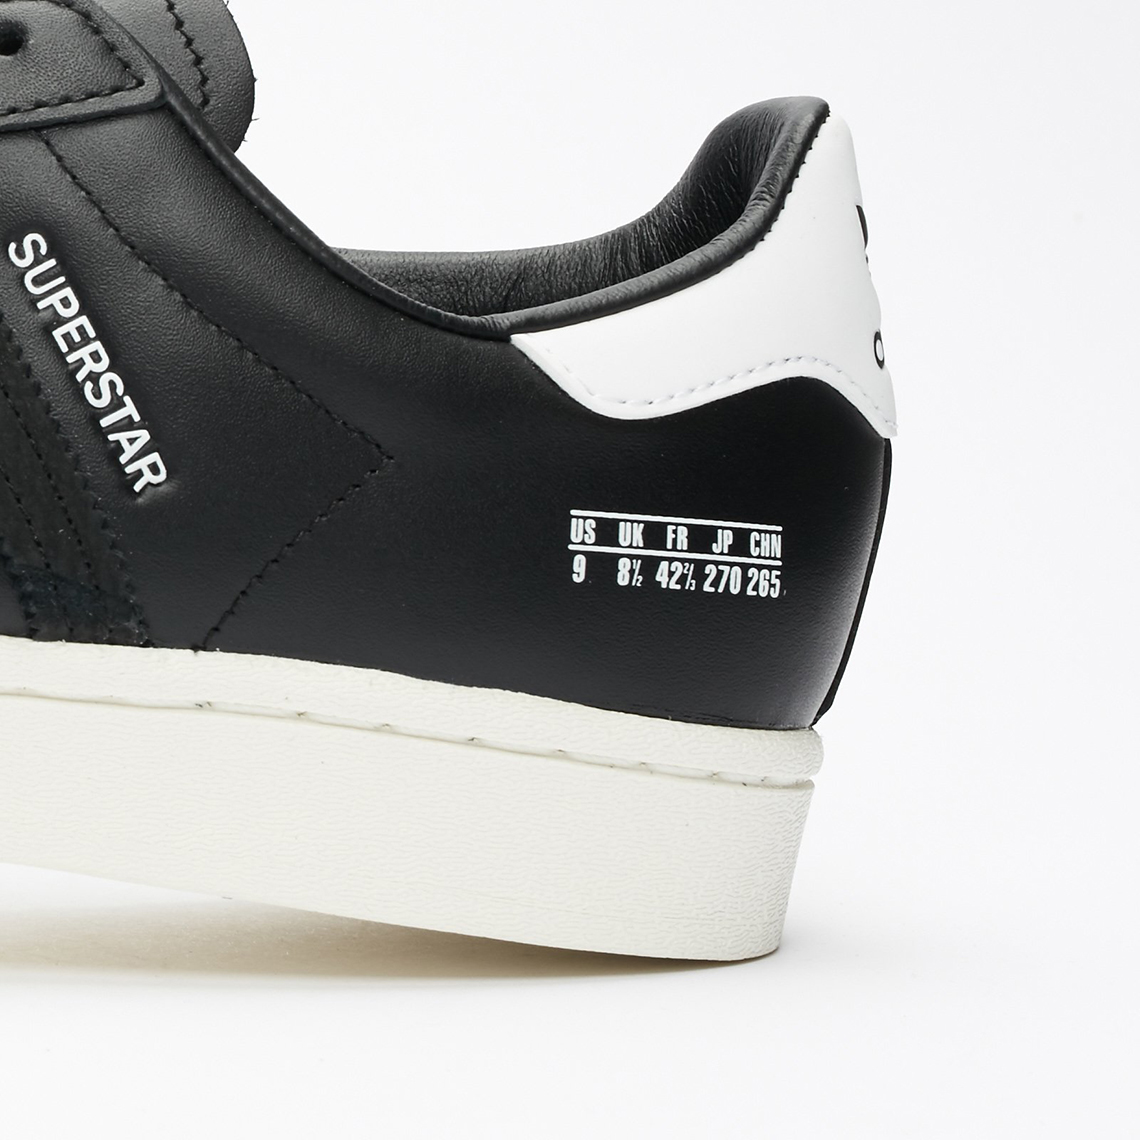 Adidas Superstar Misplaced Size Tag Black Fv2809 6